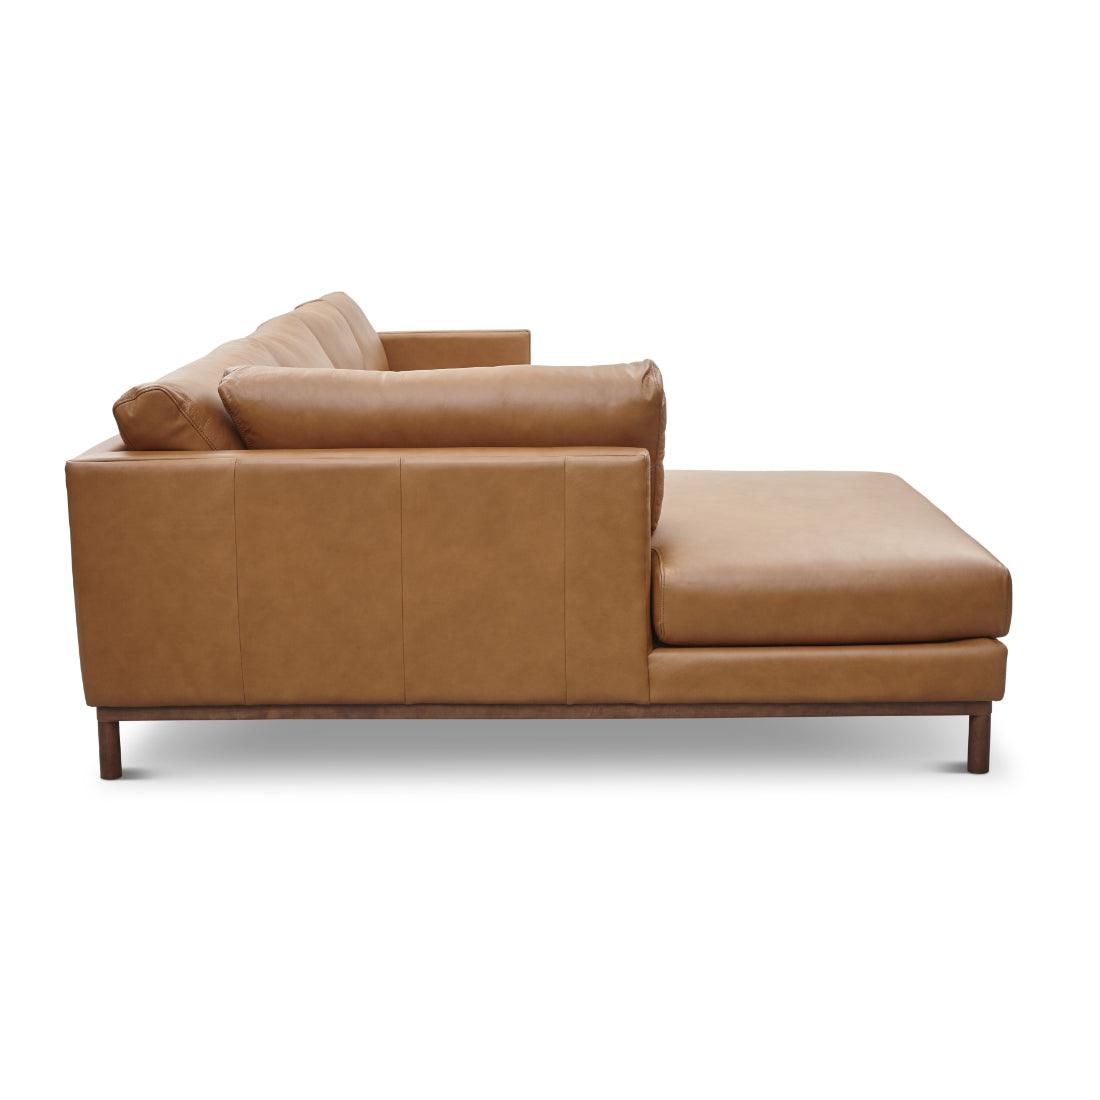 Burbank Large Leather Left Facing Sectional Sofa - Uptown Sebastian